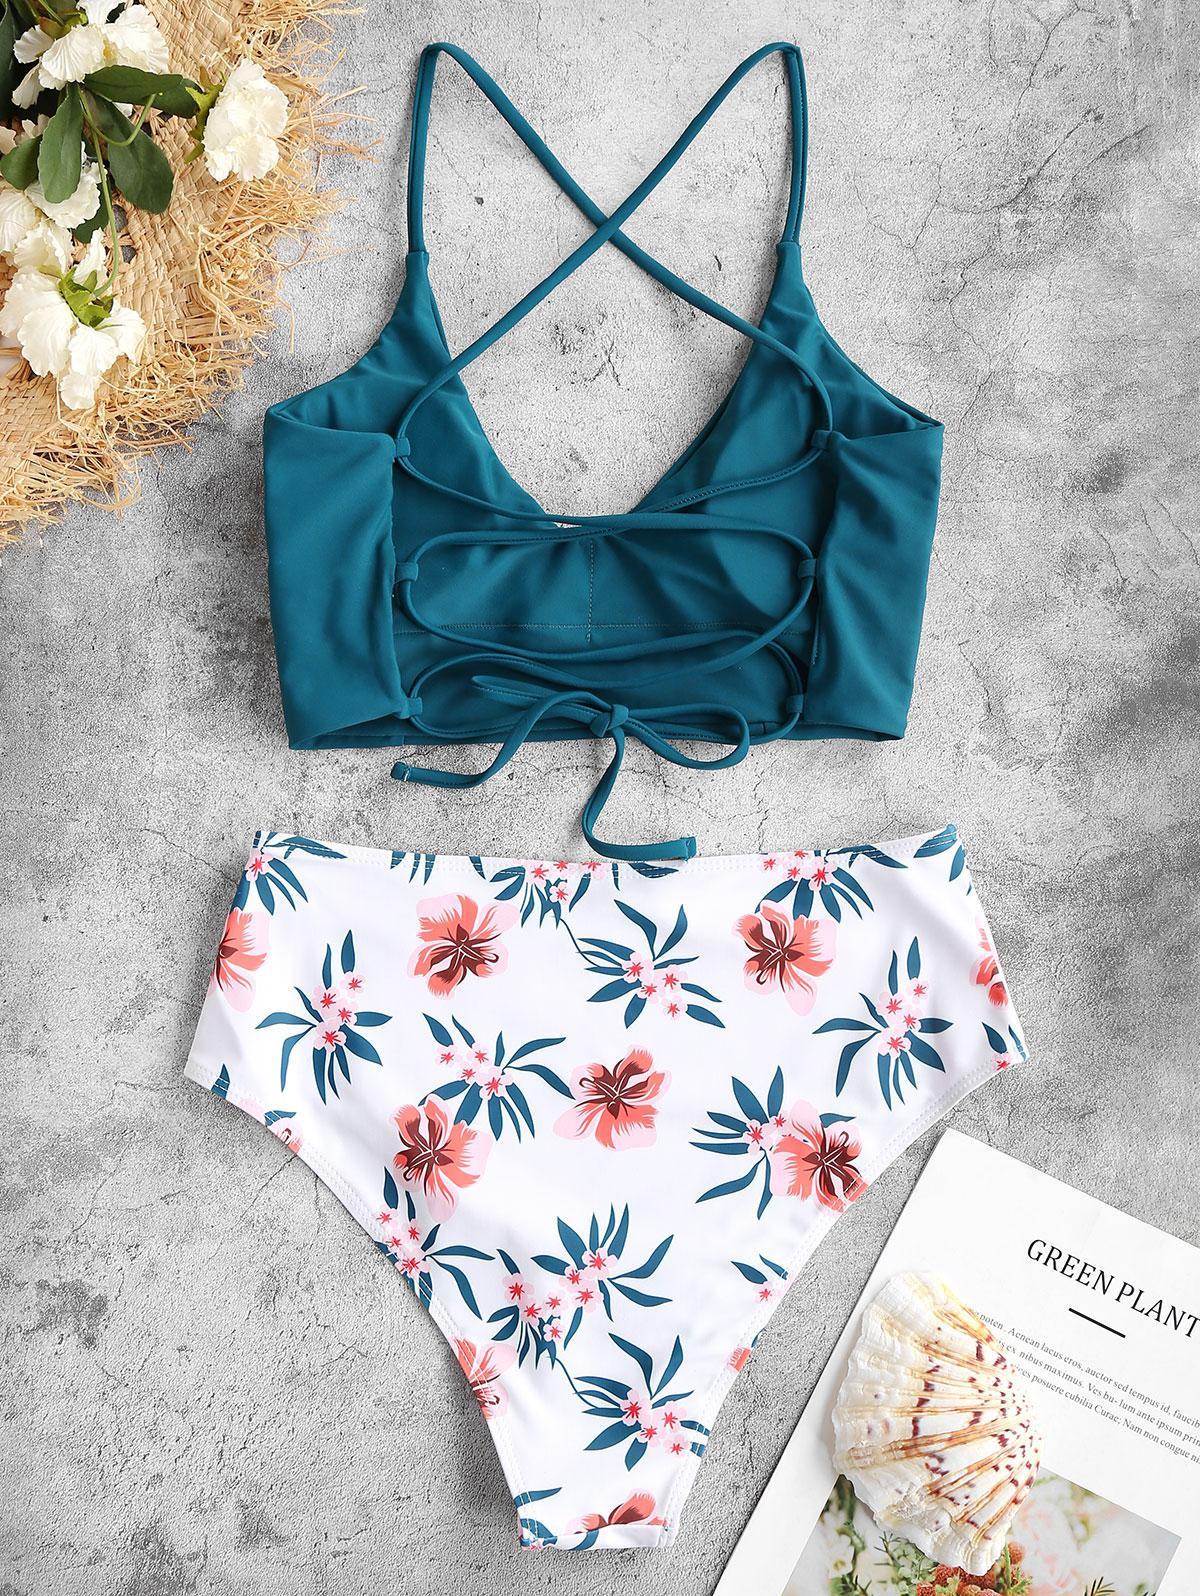 Zaful Flower Print Lace Up High Cut Tankini Swimsuit in Deep Green (Green)  | Lyst